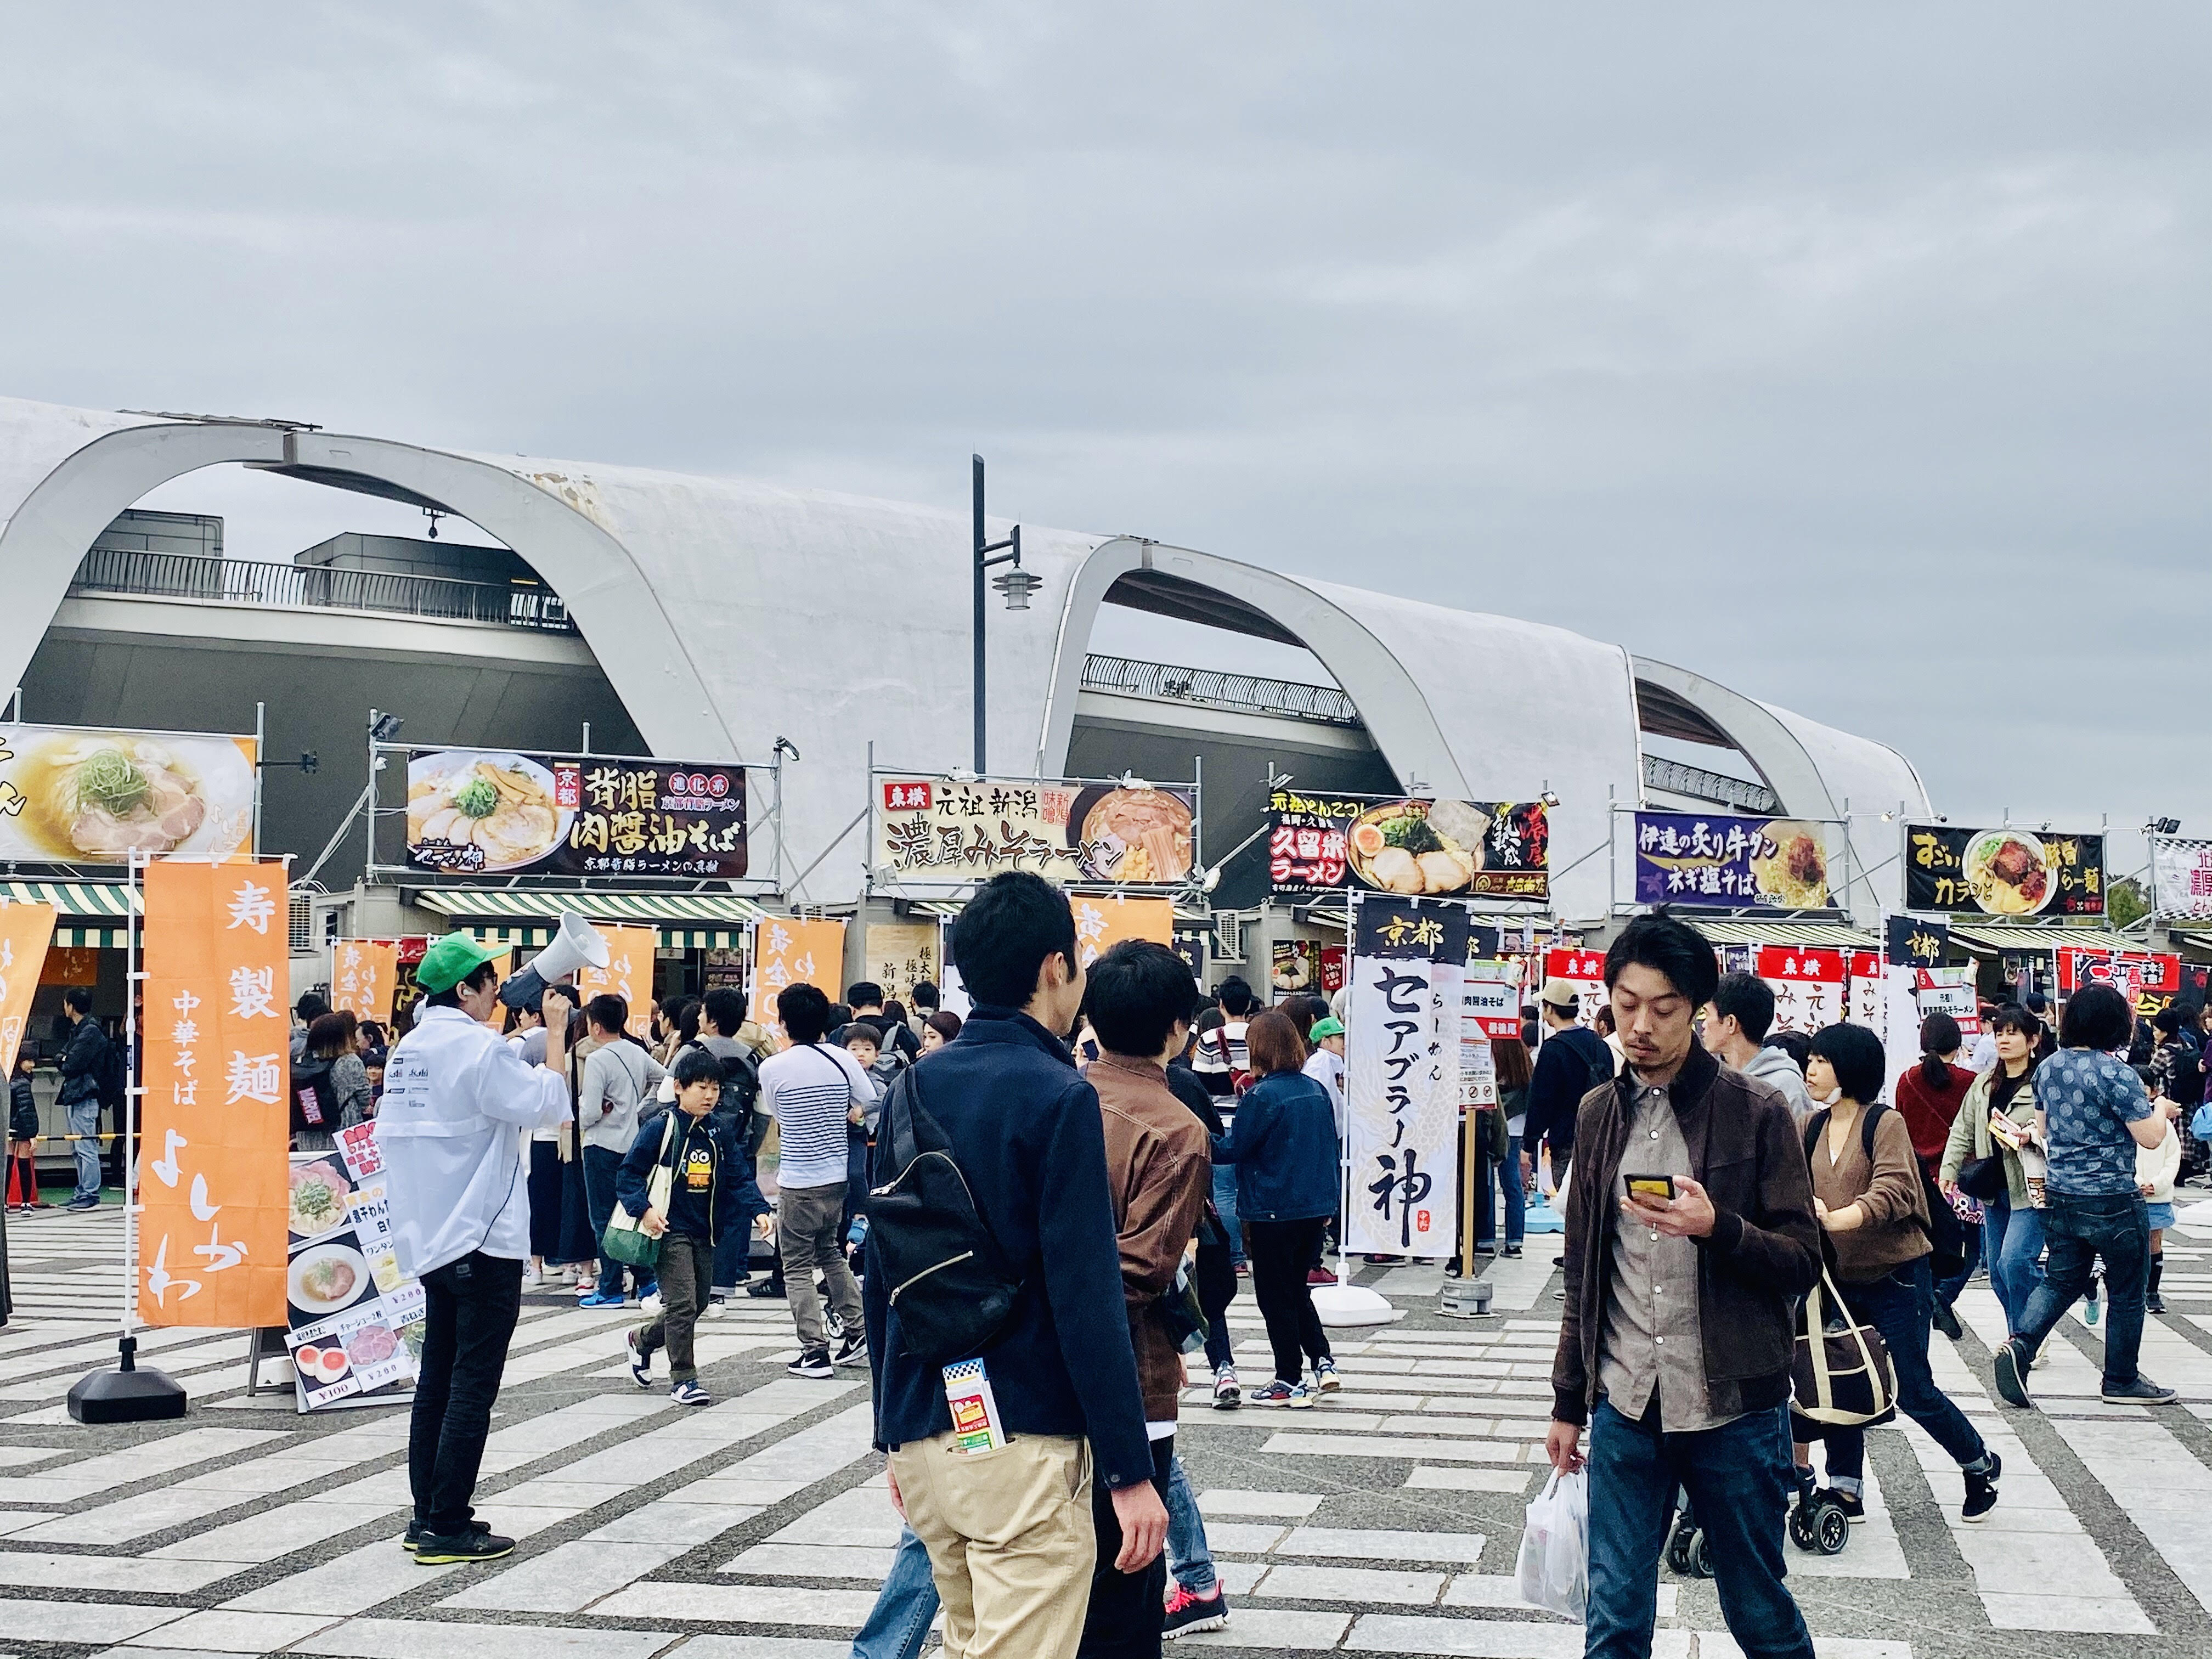 Spectacle de Ramen de Tokyo 2019 Motivist Japan